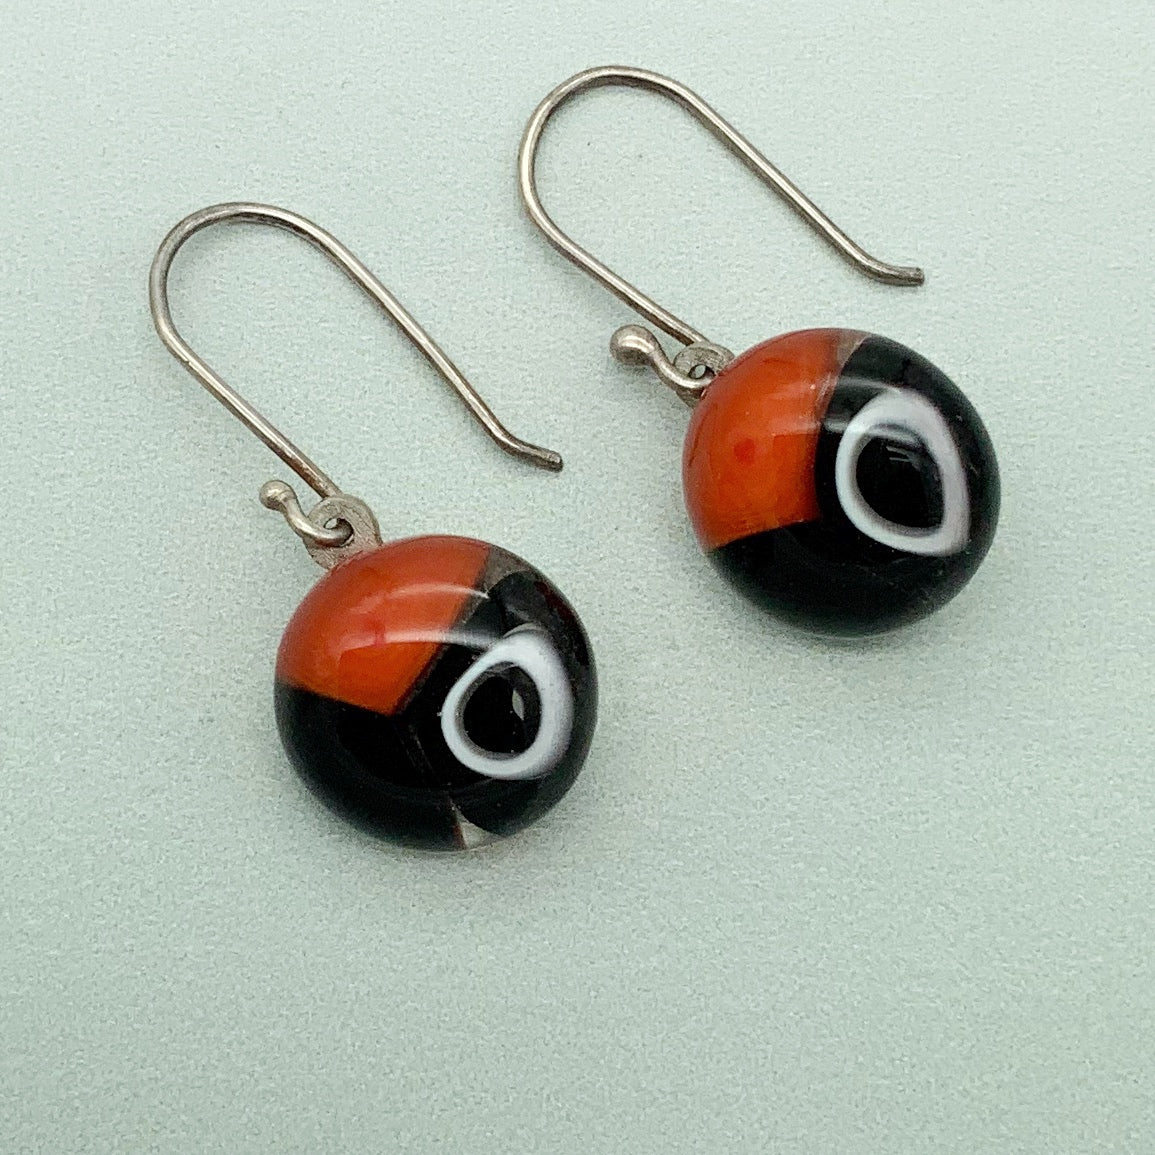 Murrini round glass dangle earrings - Black & white circles with red glass